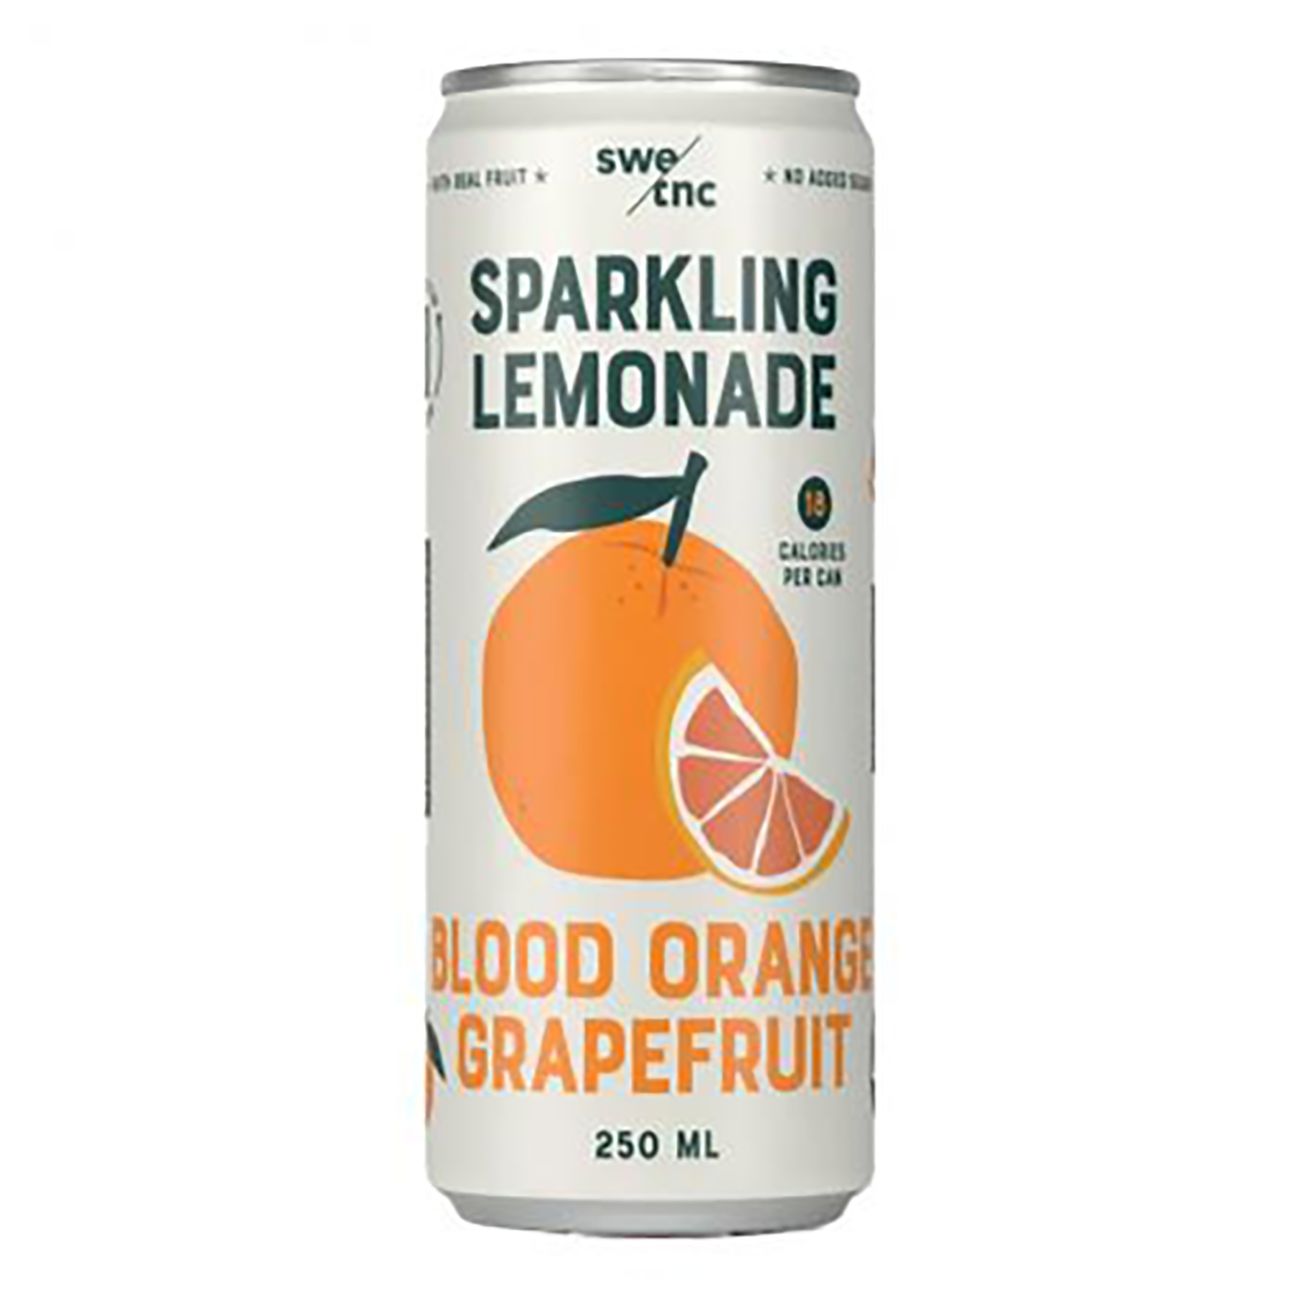 swedish-tonic-sparkling-lemonade-blood-orange-grape-95373-1